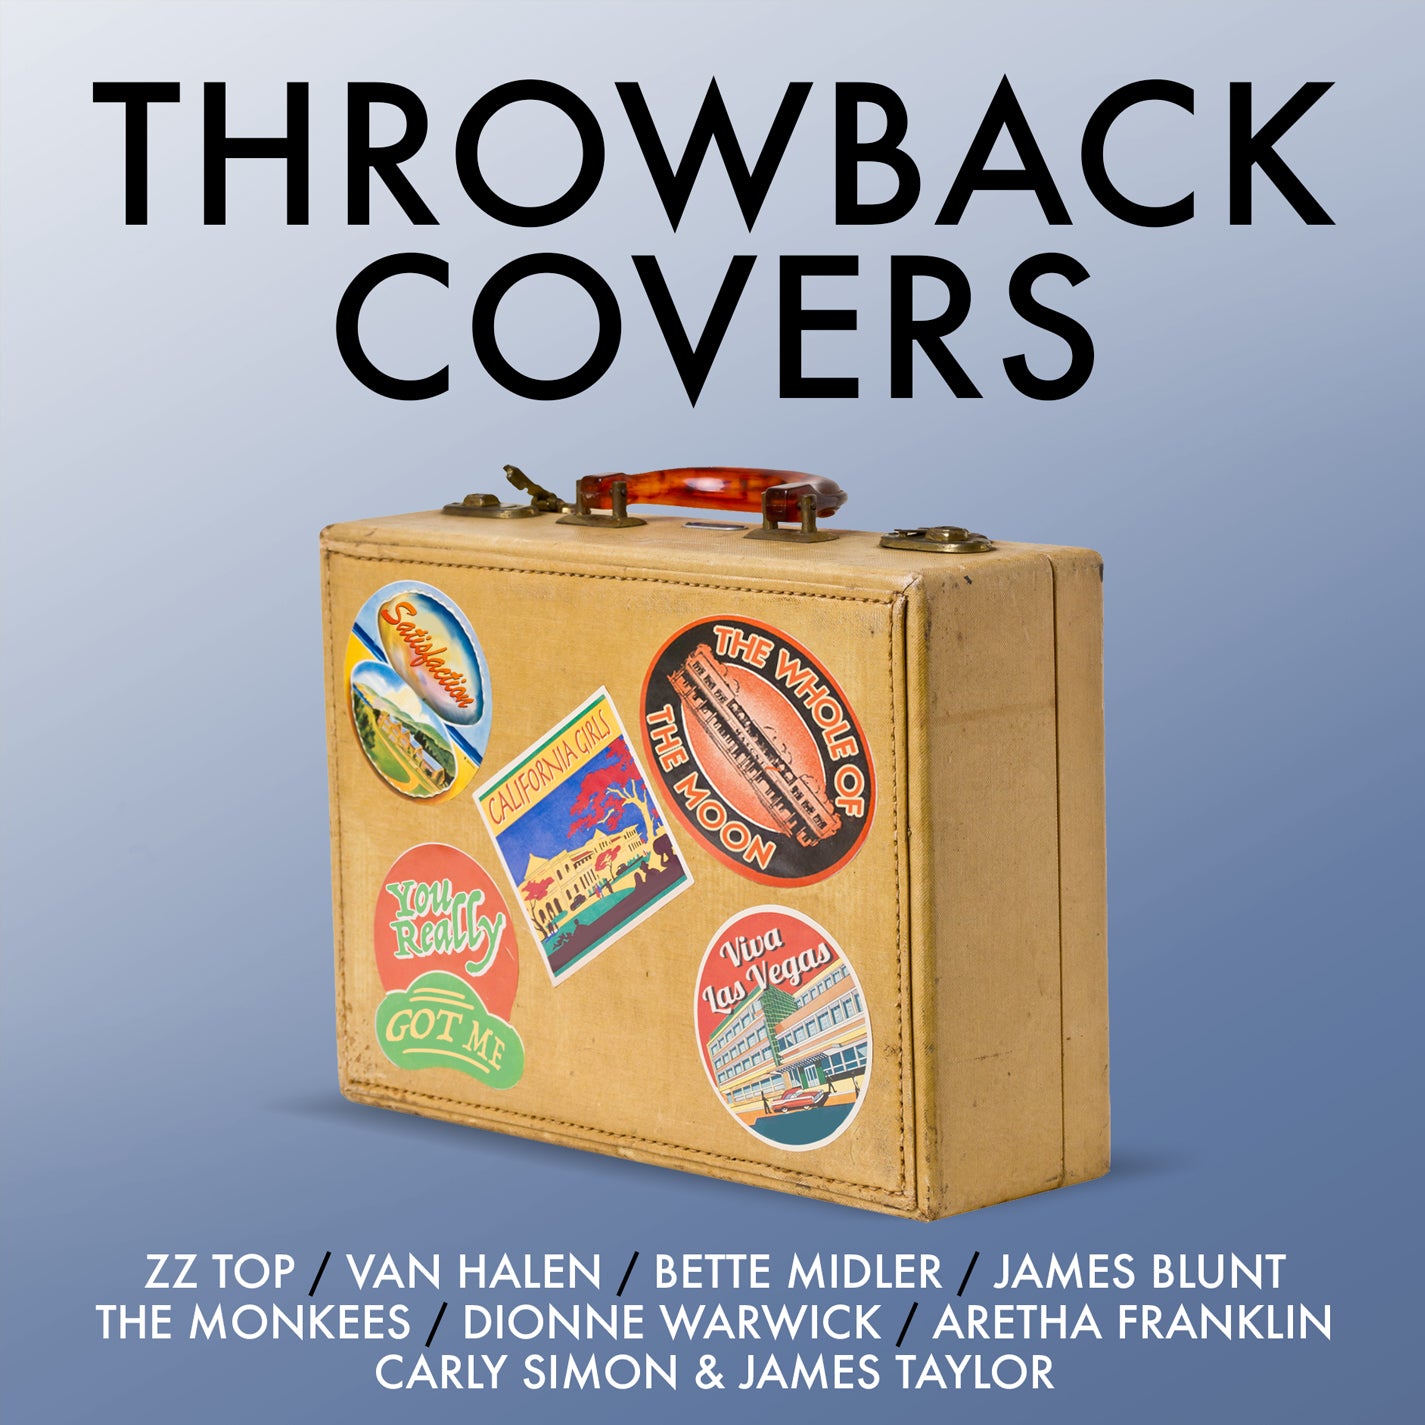 THROWBACK COVERS – Warner Music Australia Store1425 x 1425